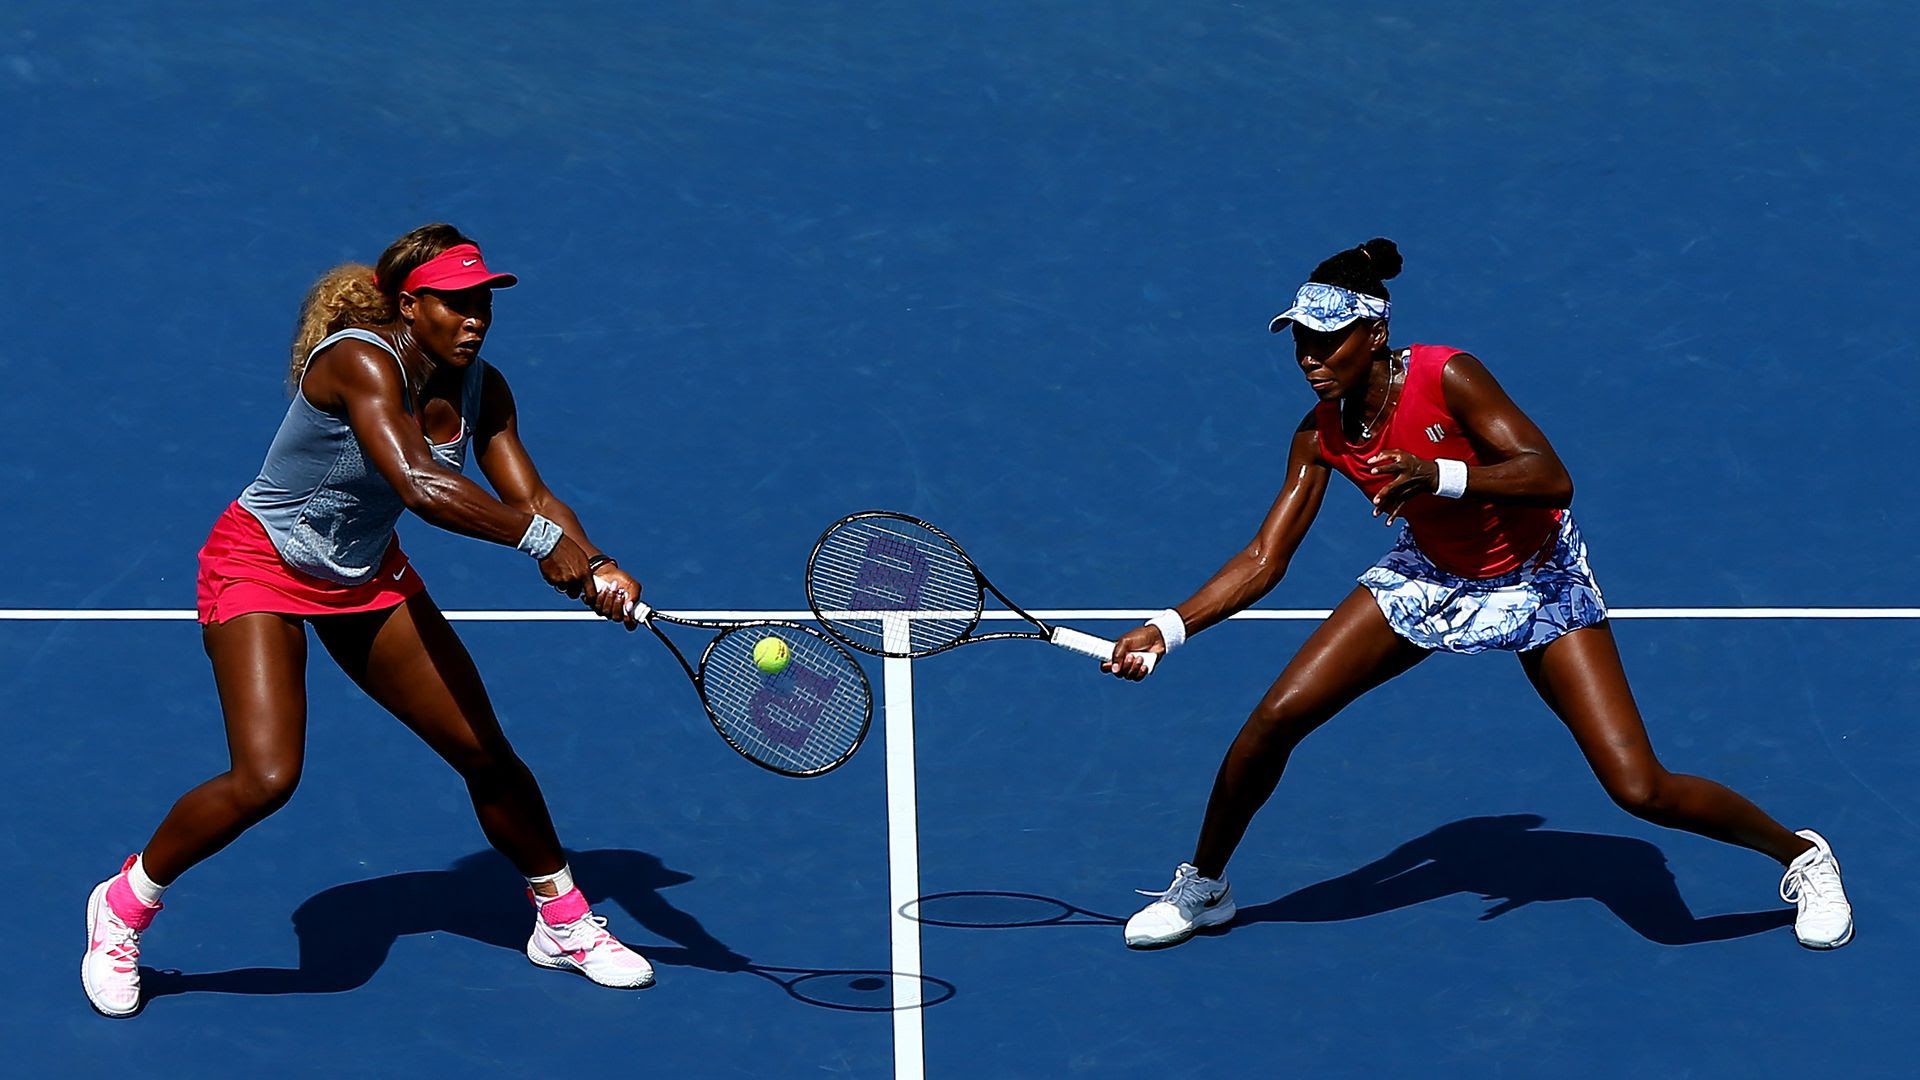 Venus and Serena Williams playing tennis.